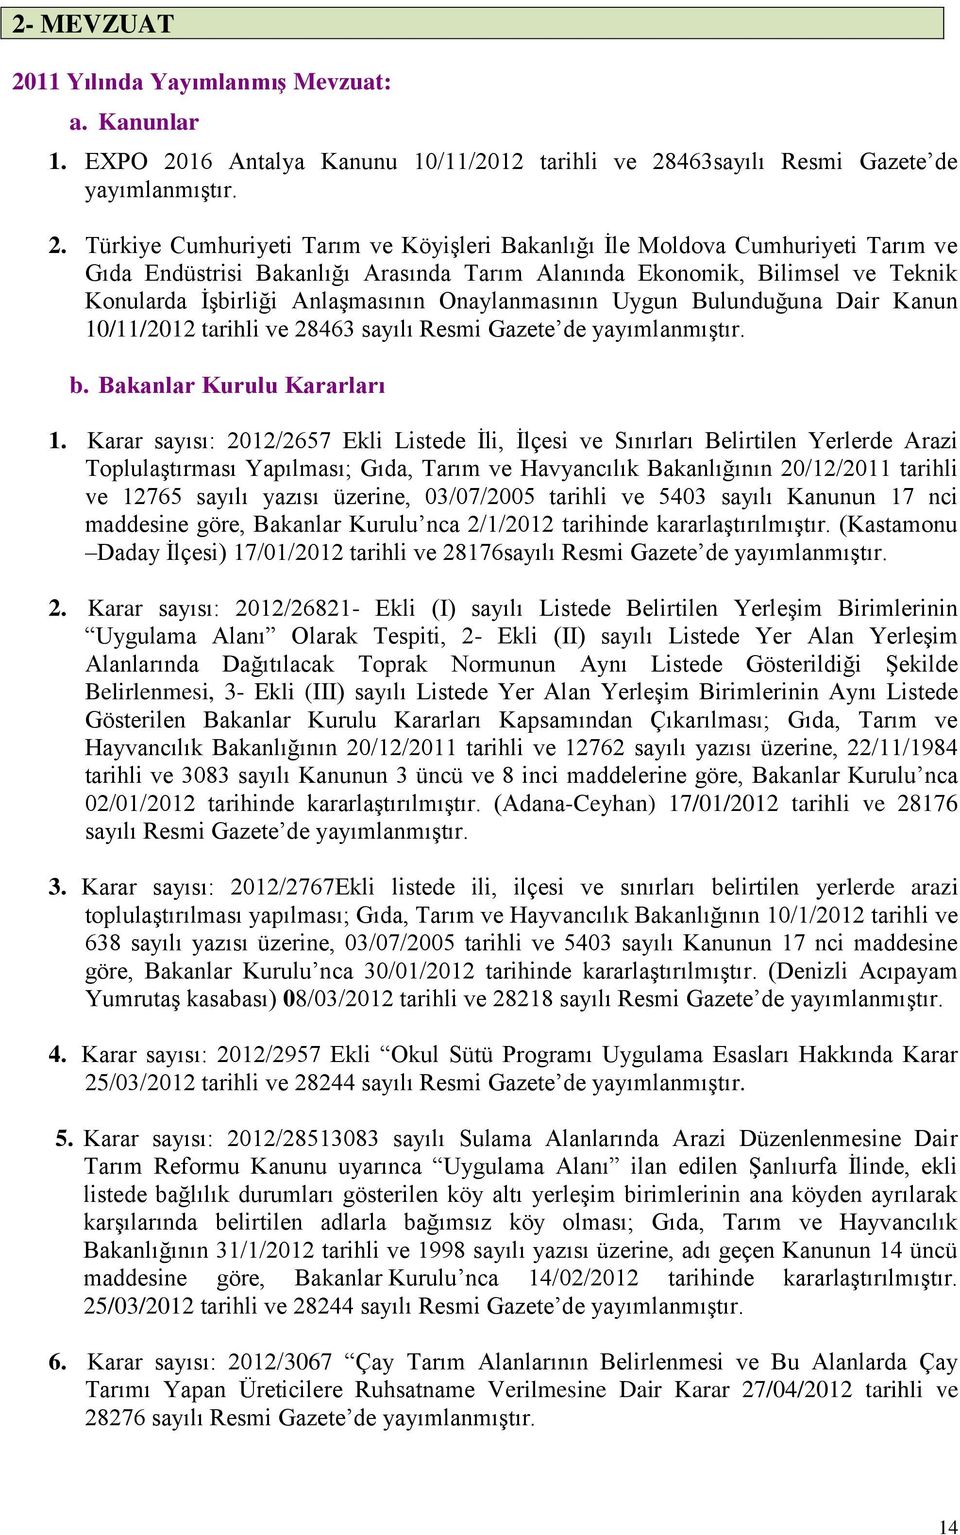 16 Antalya Kanunu 10/11/2012 tarihli ve 28